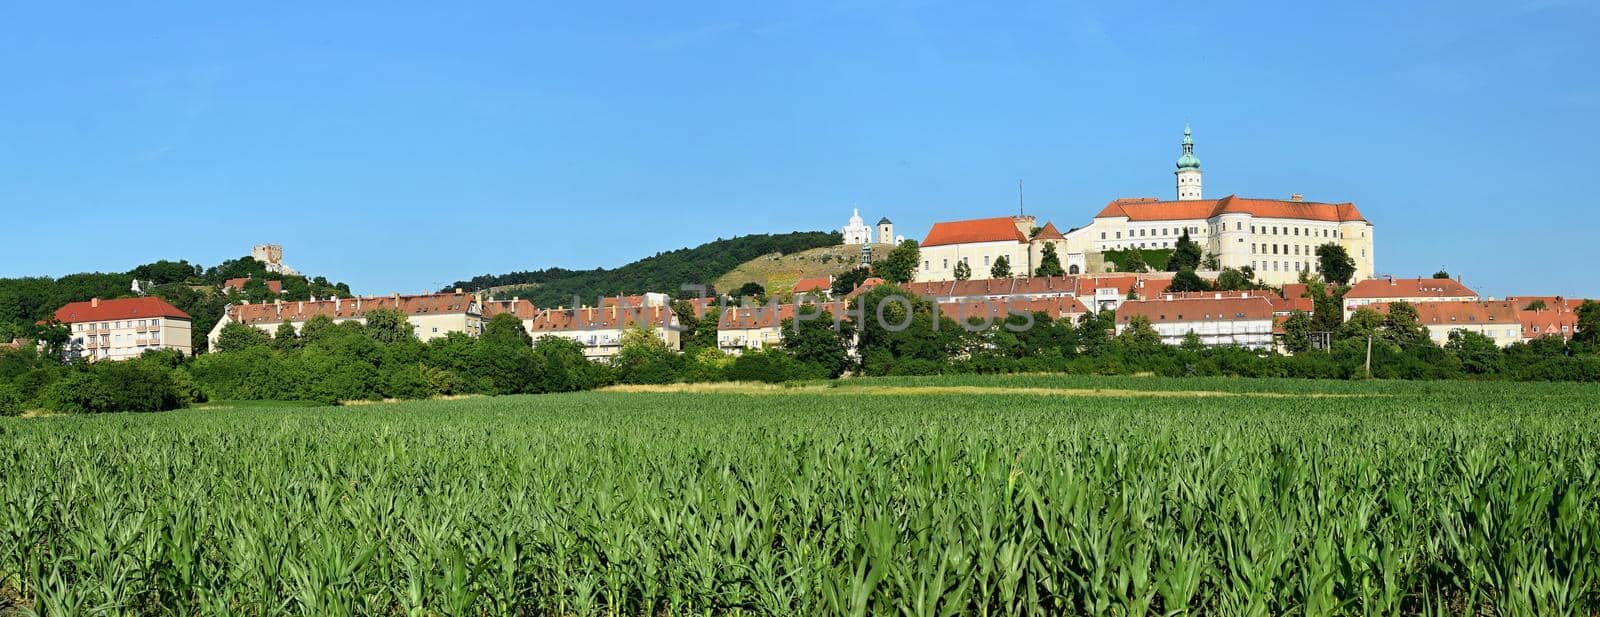 Castle of Mikulov, South Moravia. Czech Republic. by Montypeter